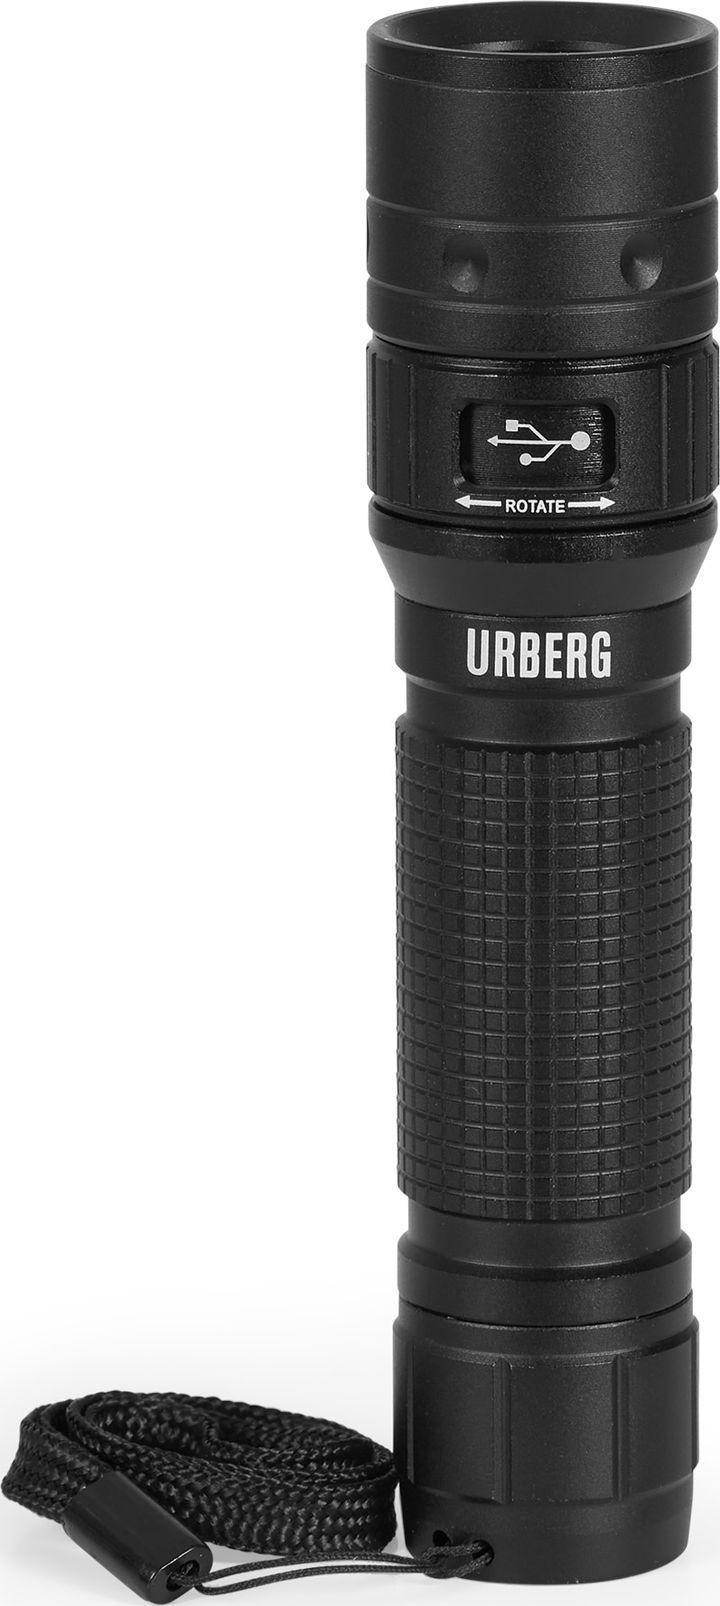 Urberg Flashlight 1000 LM Black Urberg